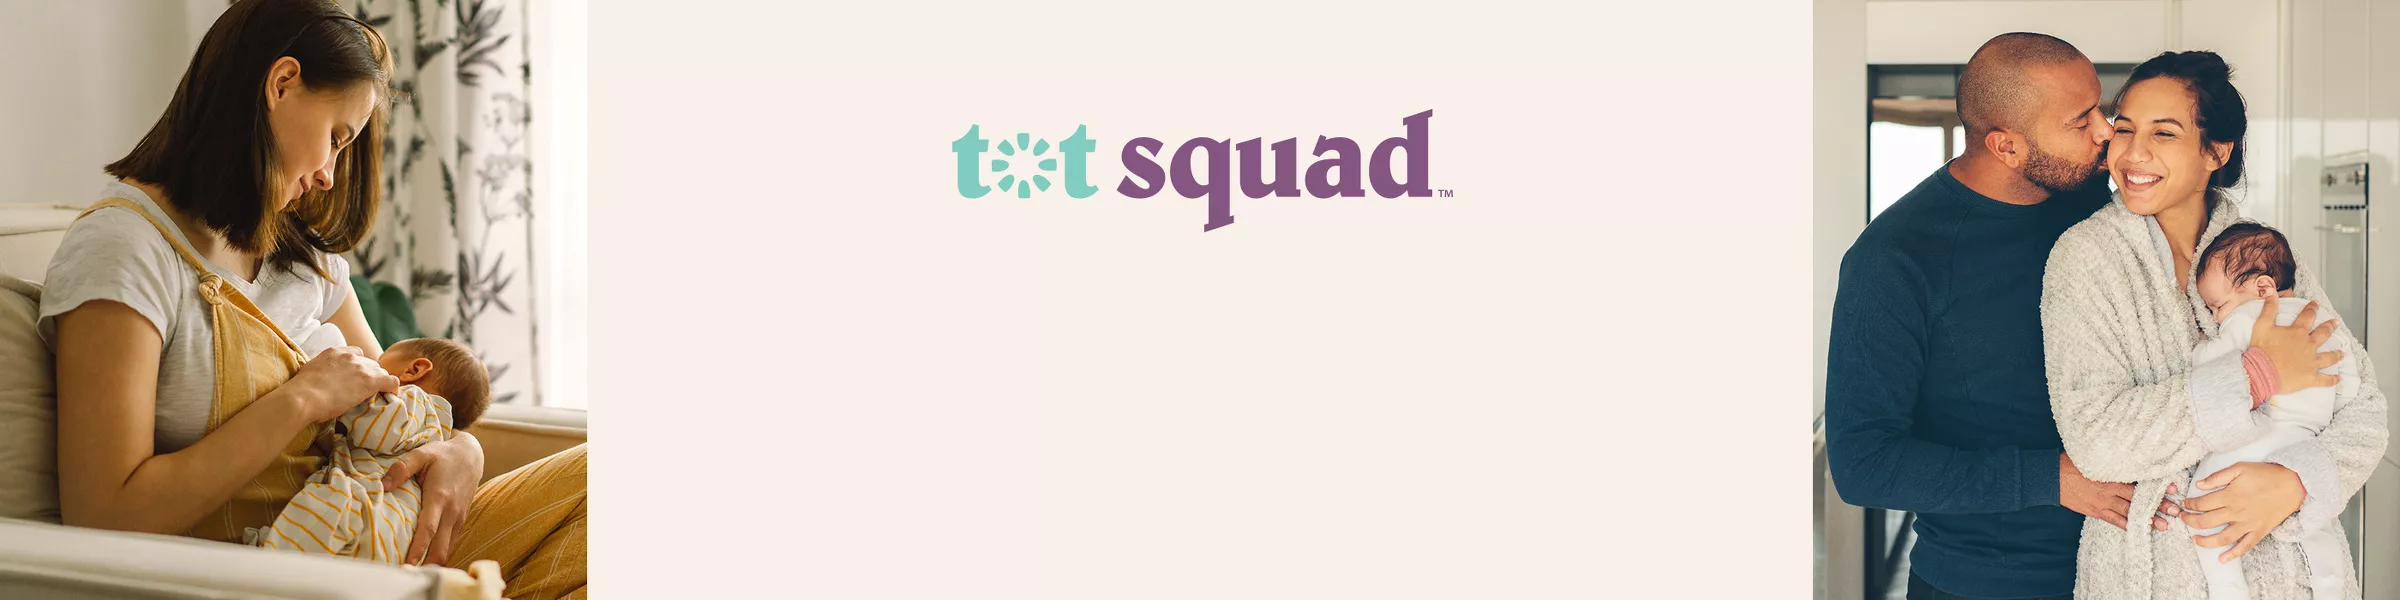 Tot Squad logo